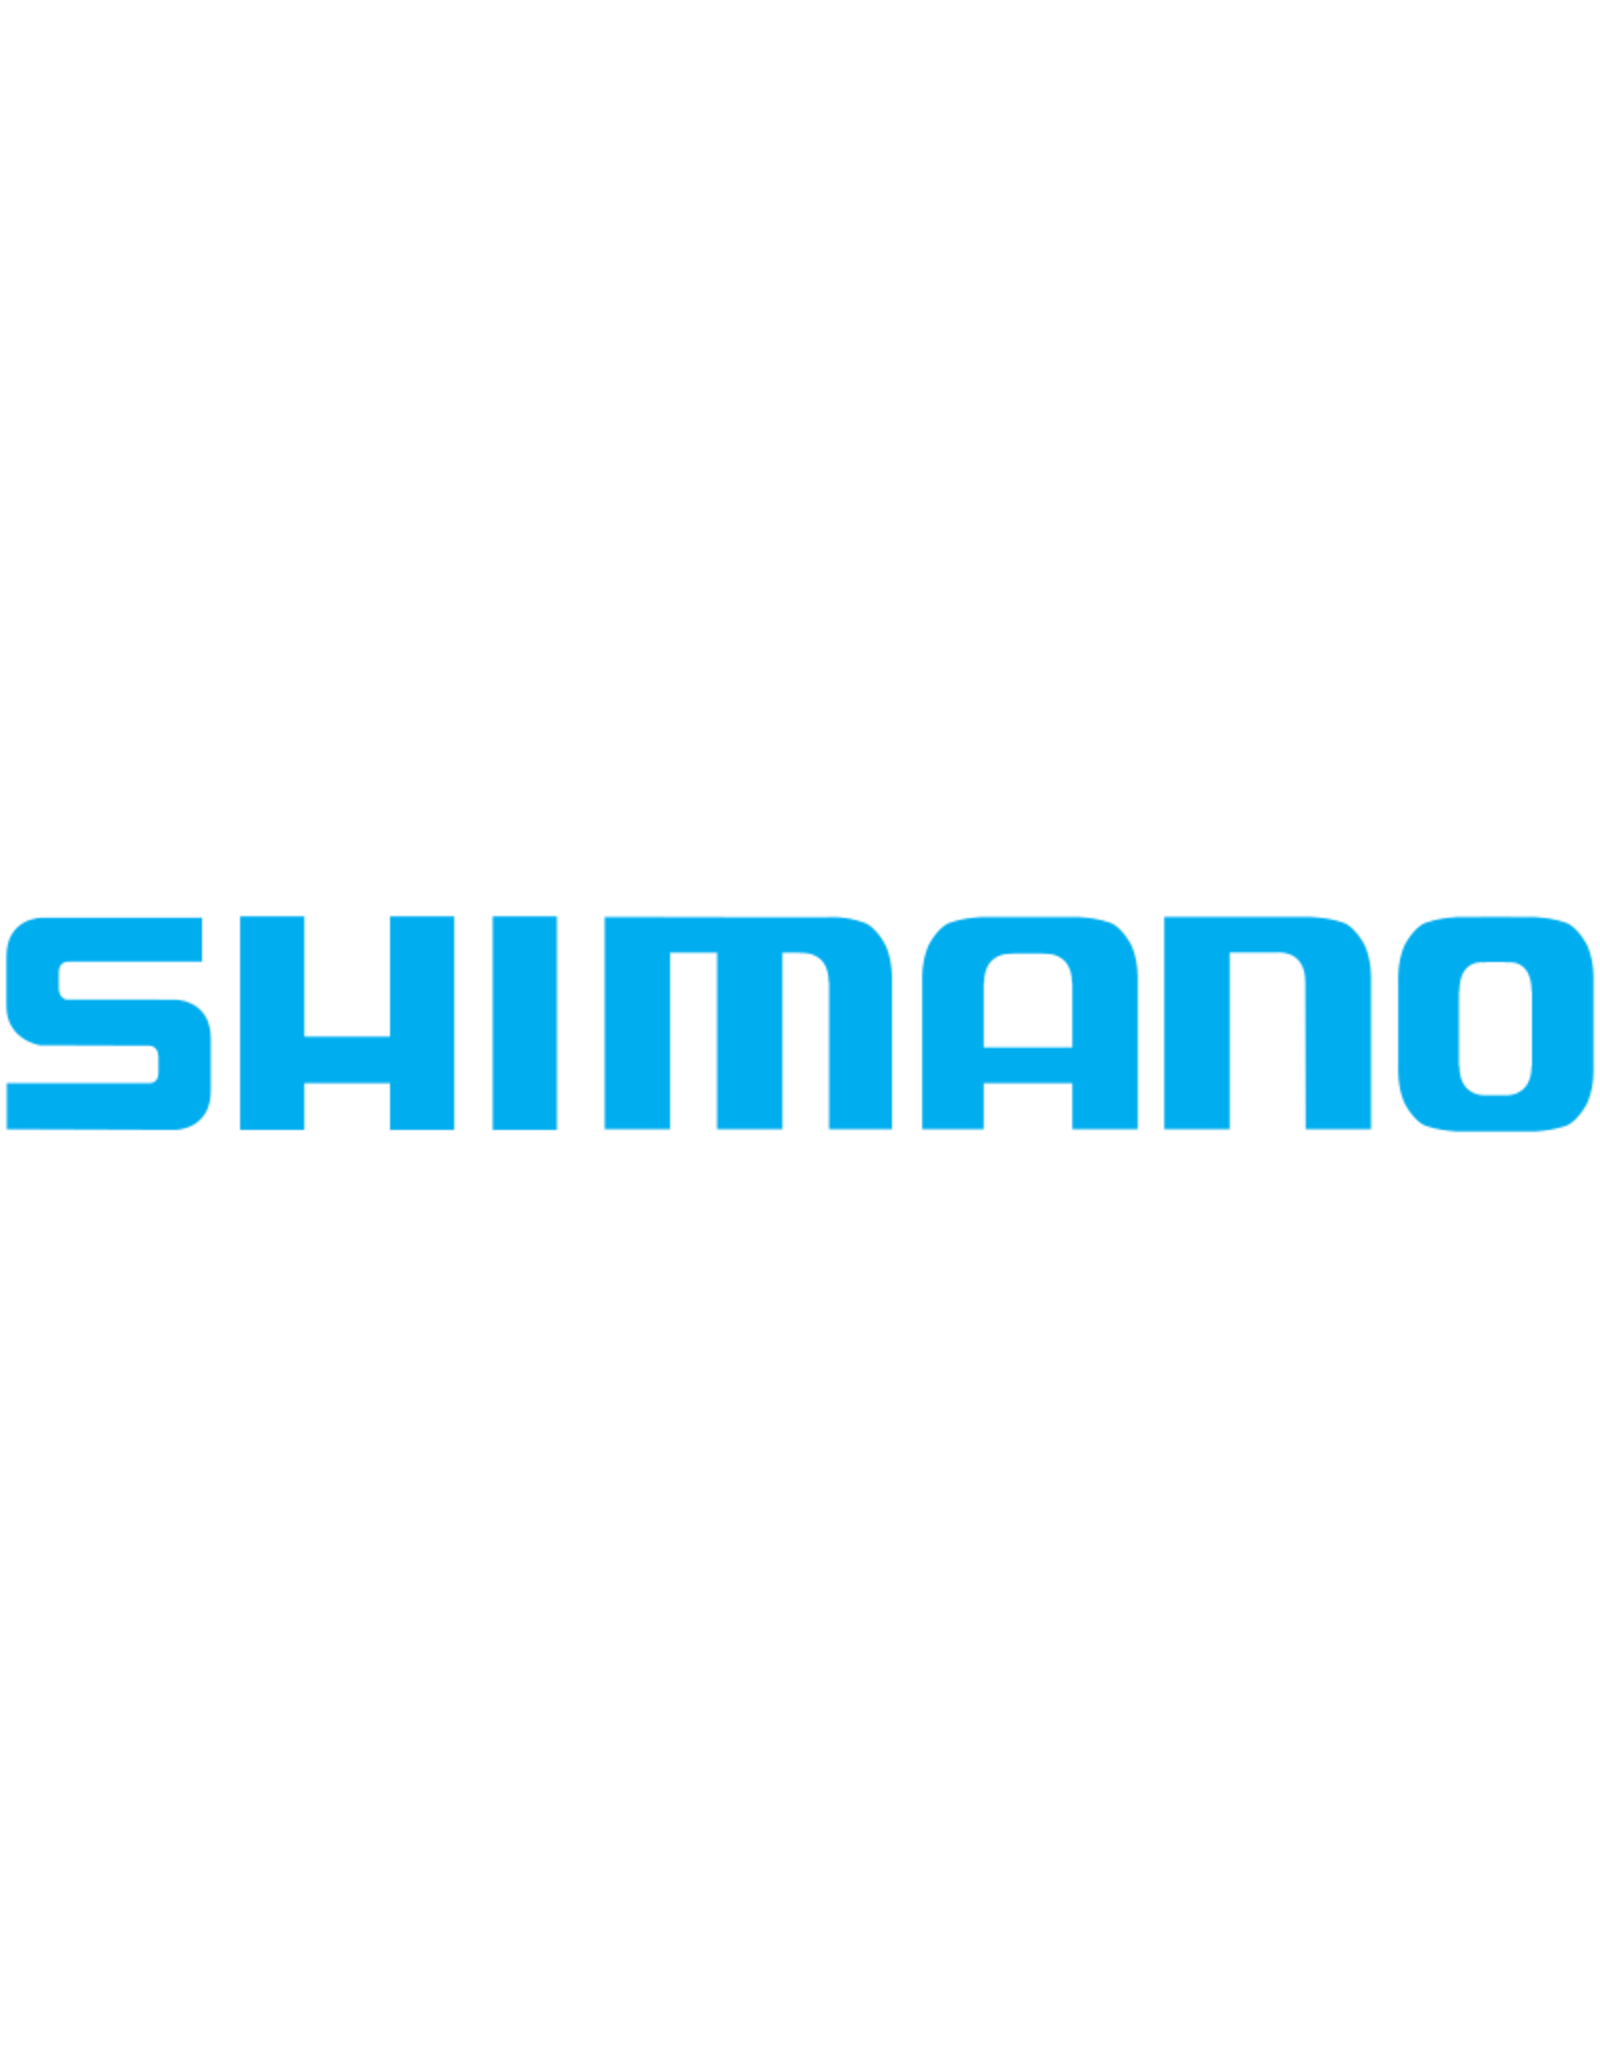 Shimano RD19884  OSC. SLIDER BUSHING